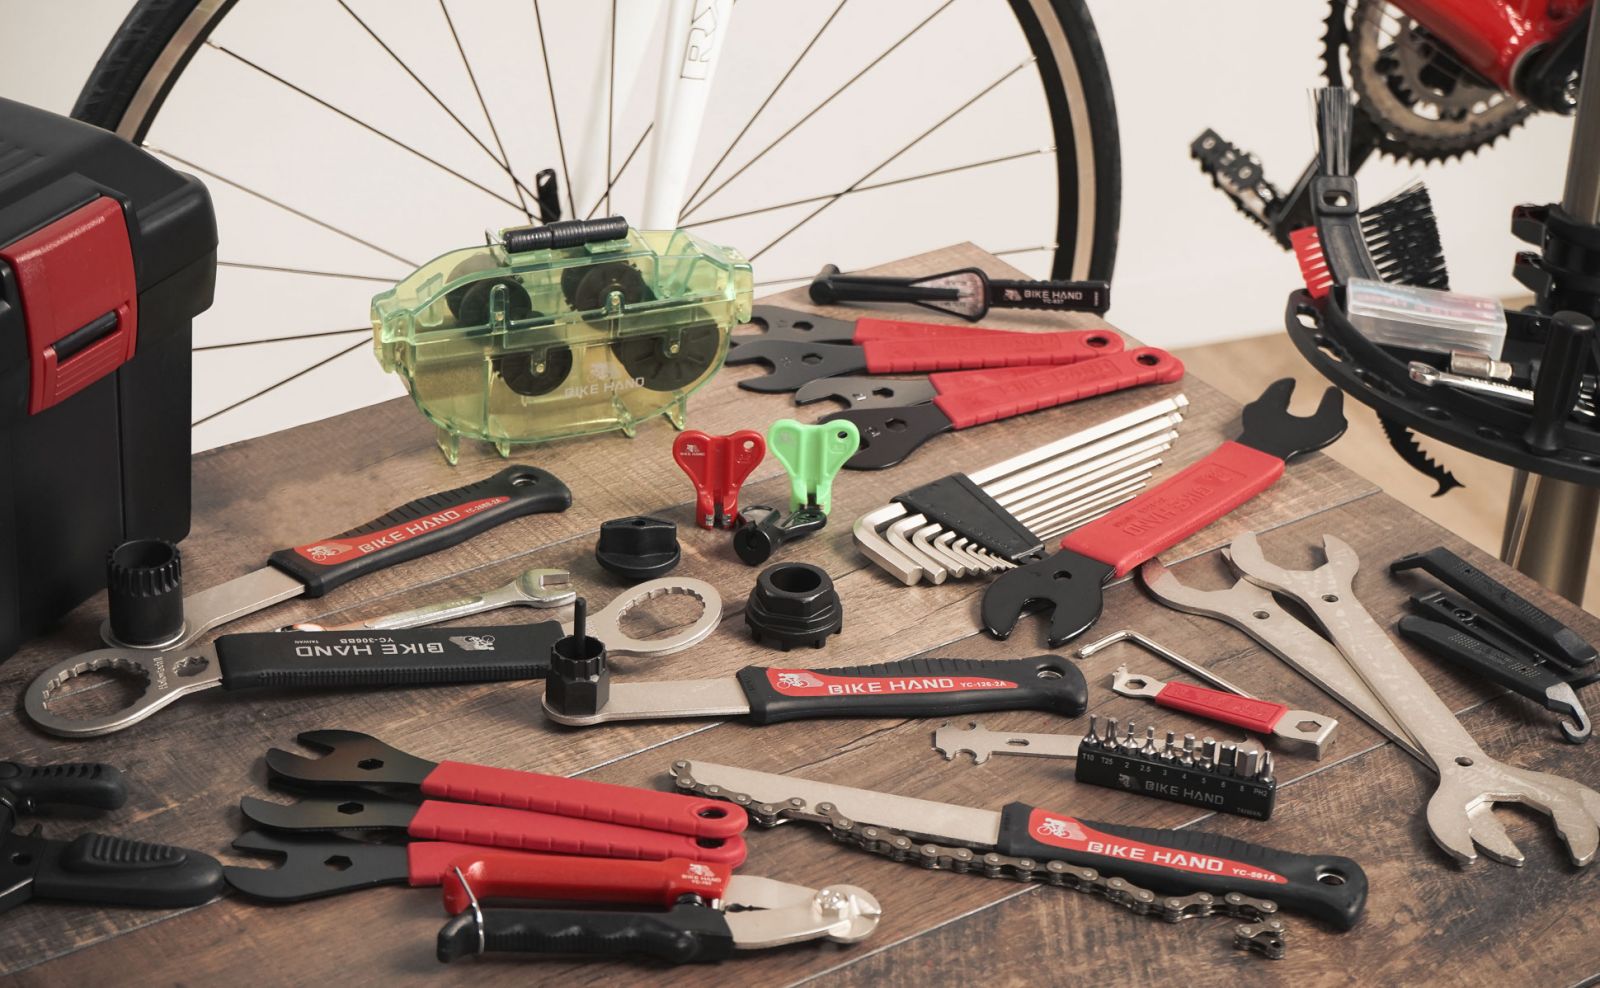 bikehand tools